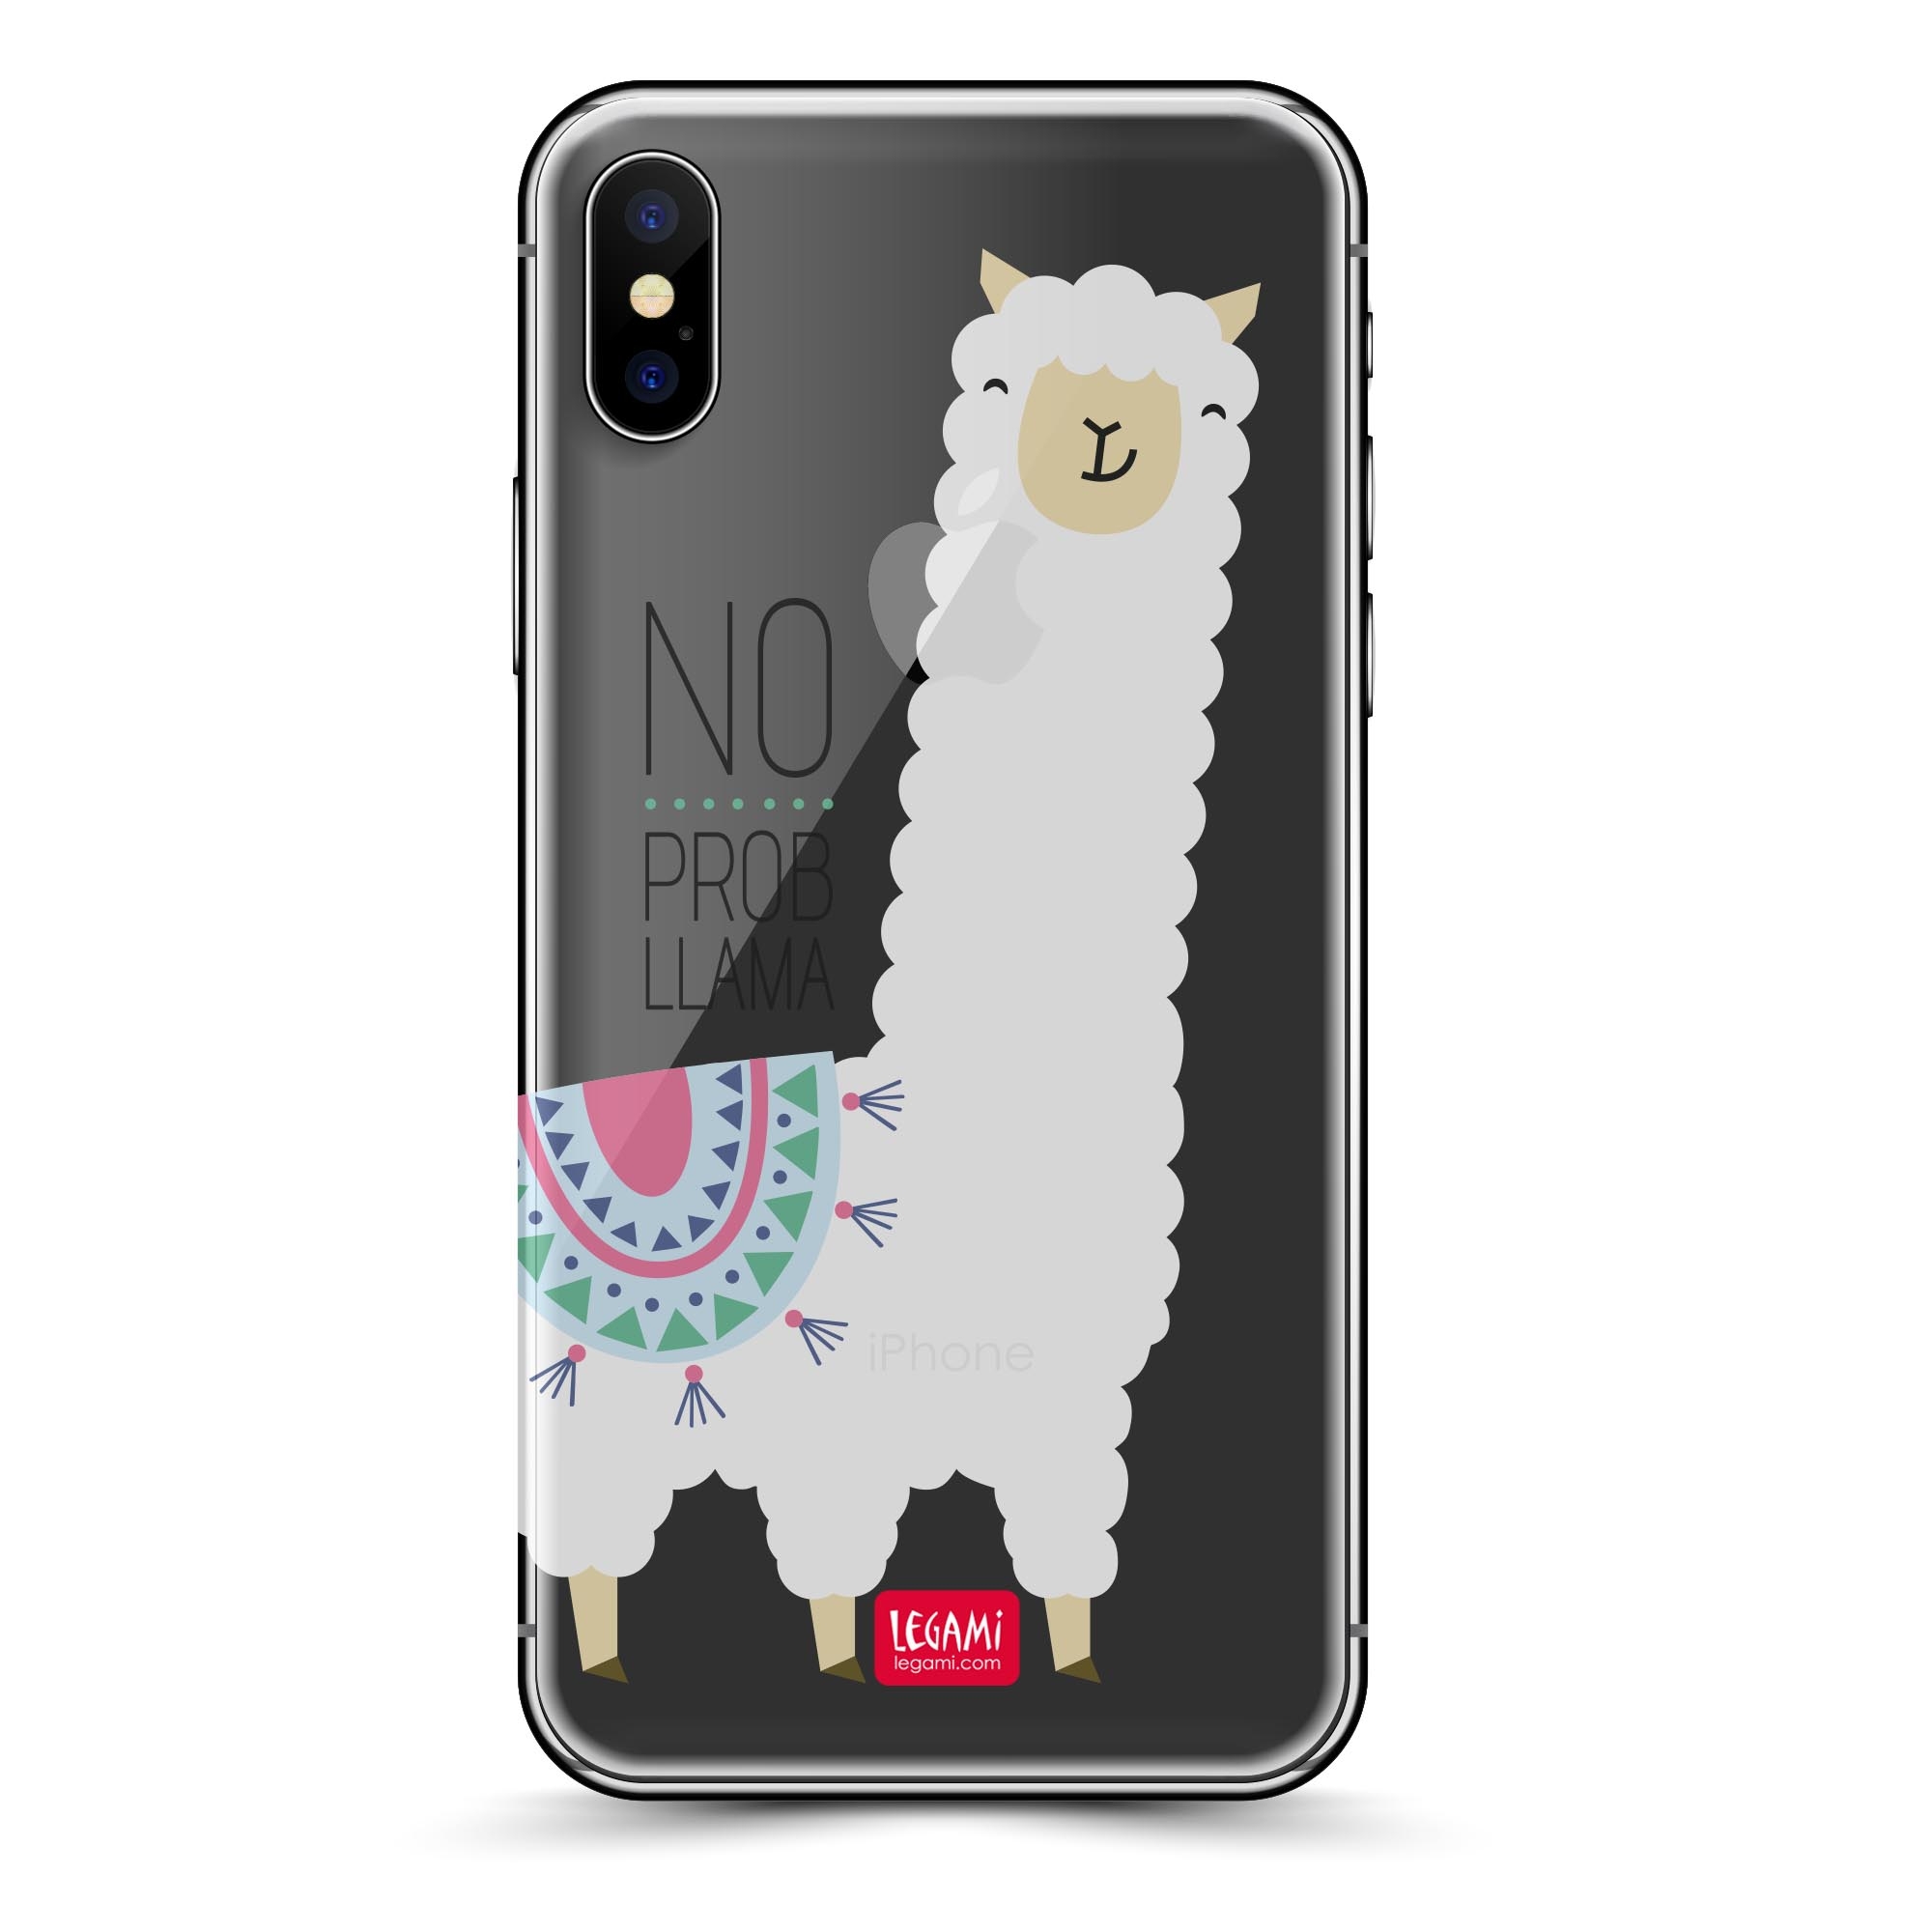  Carcasa Iphone X - No ProbLlama | Legami 